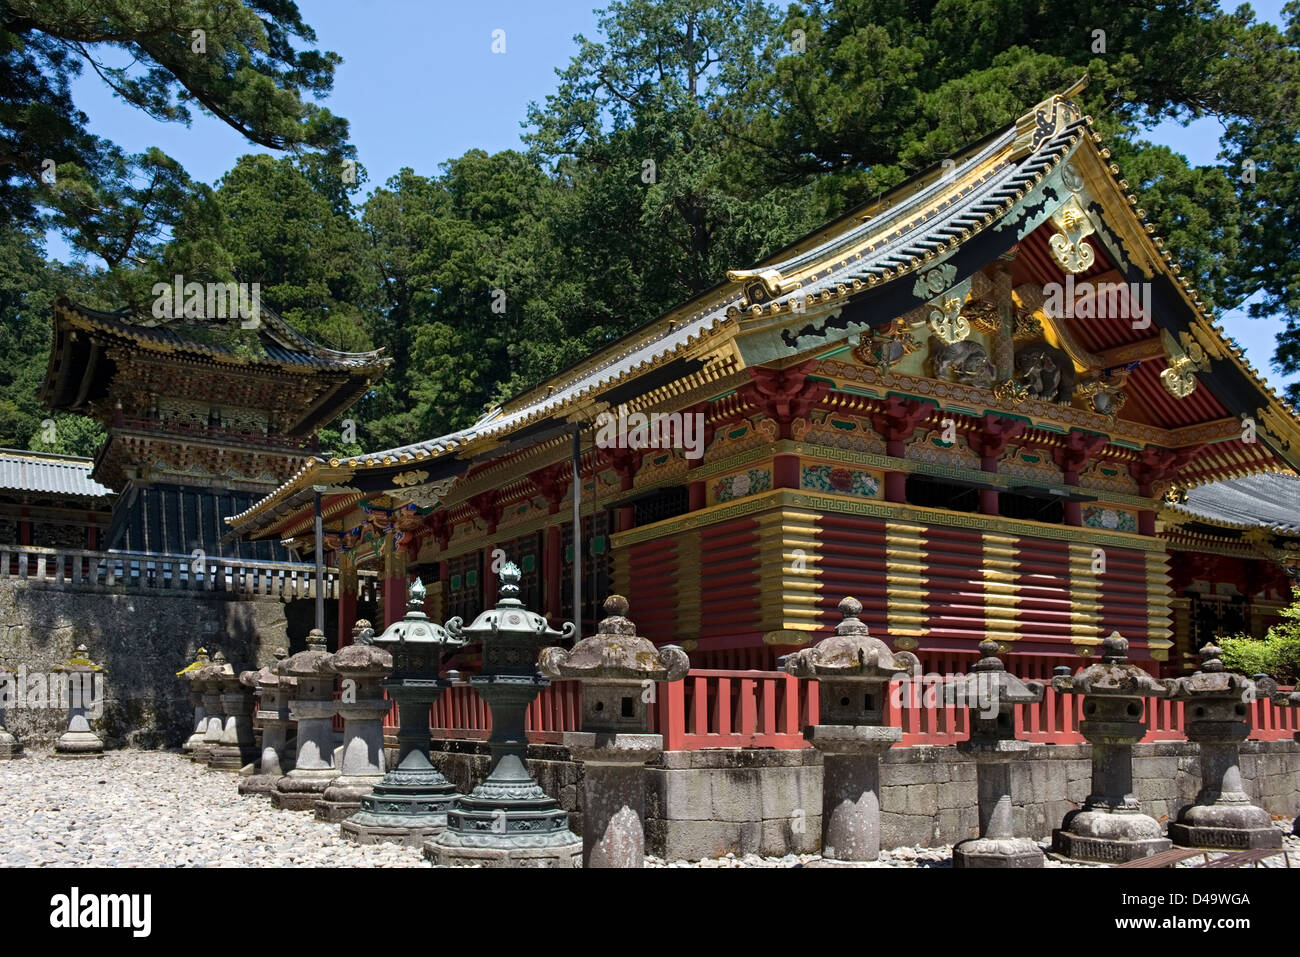 Ornate gold decorated sacred buildings surrounded by stone lanterns at Toshogu Jinja Shrine in Nikko, Tochigi, Japan. Stock Photo